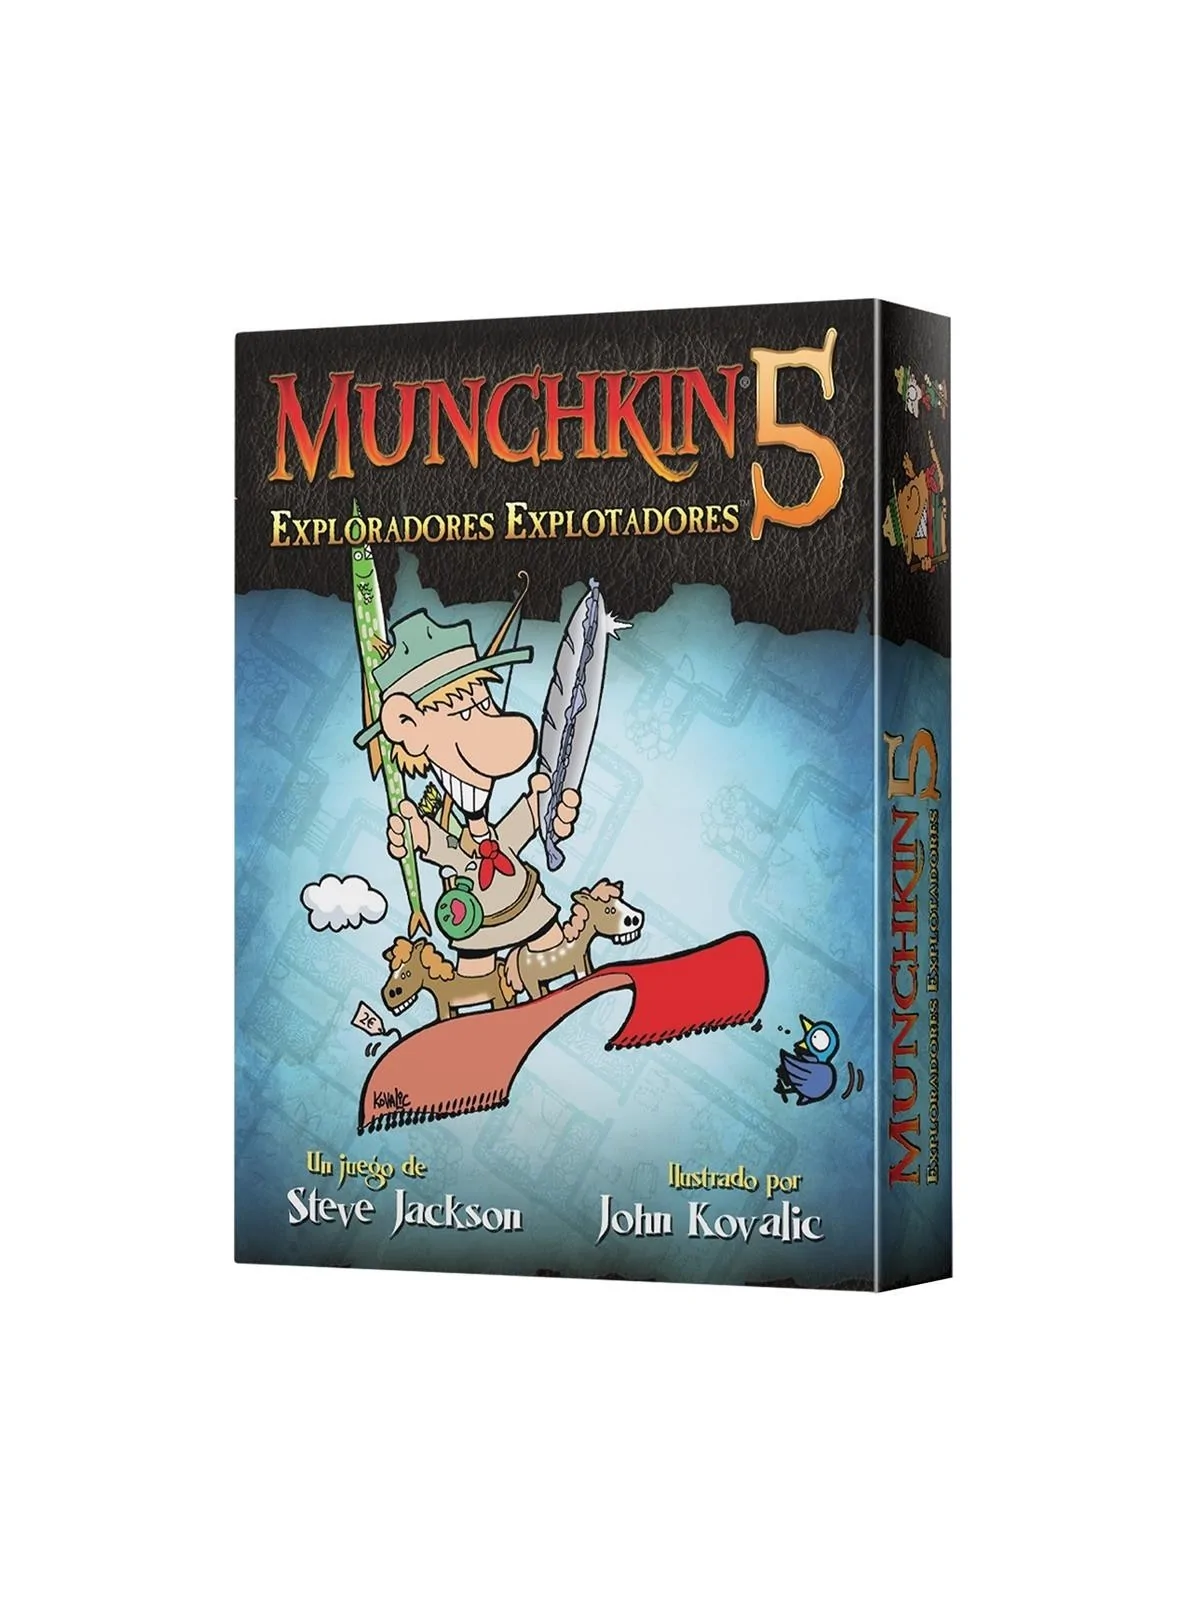 Comprar Munchkin 5: Exploradores Explotadores barato al mejor precio 1